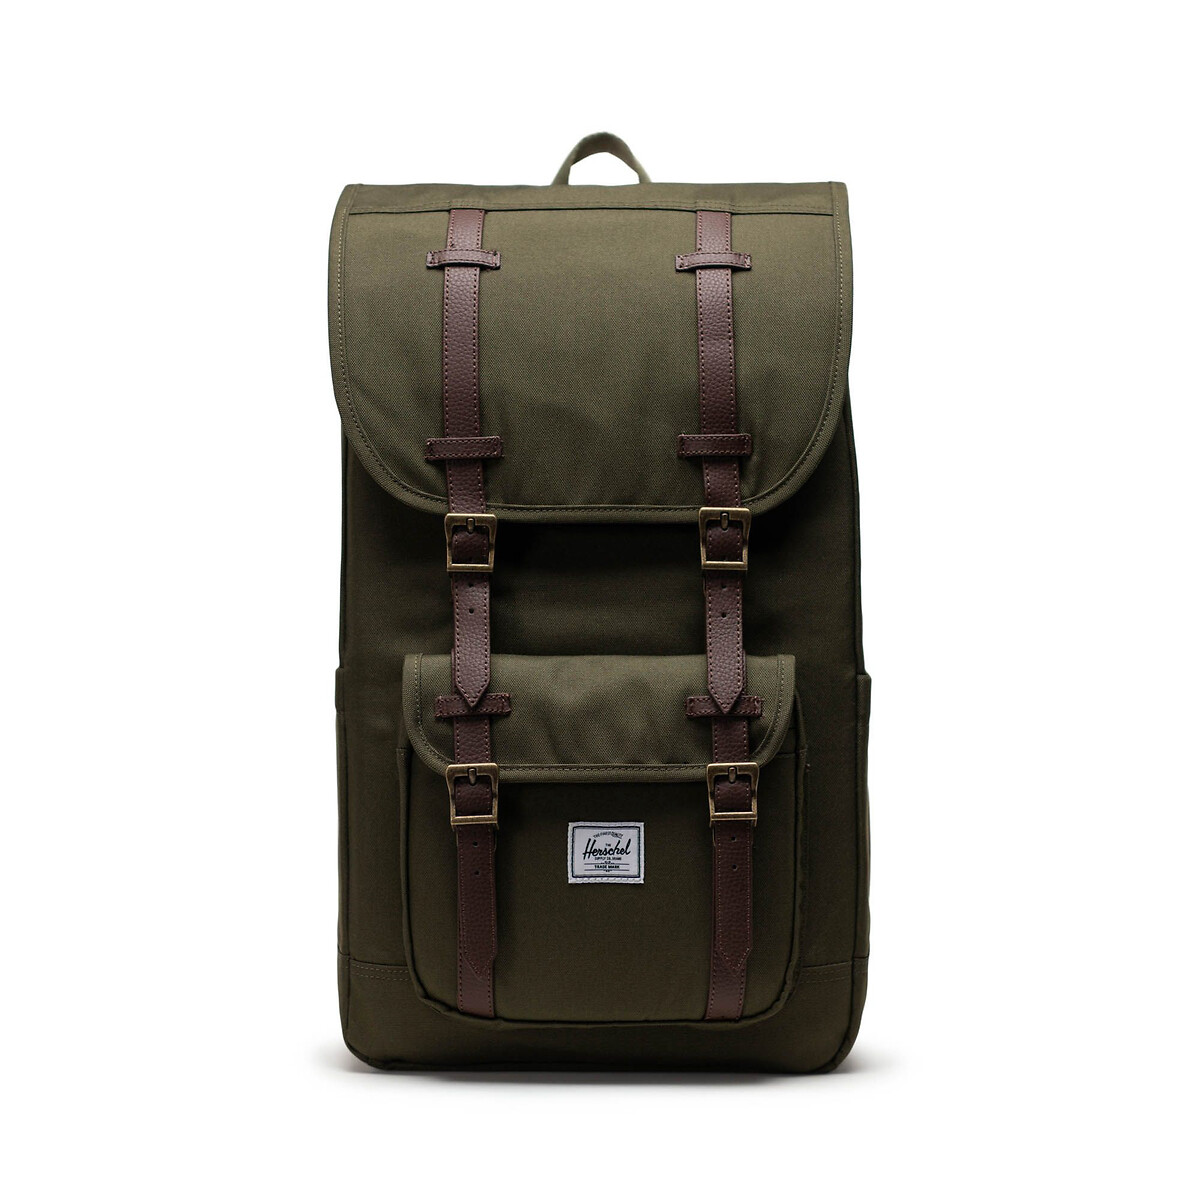 Рюкзак LITTLE AMERICA для планшета 15 единый размер зеленый